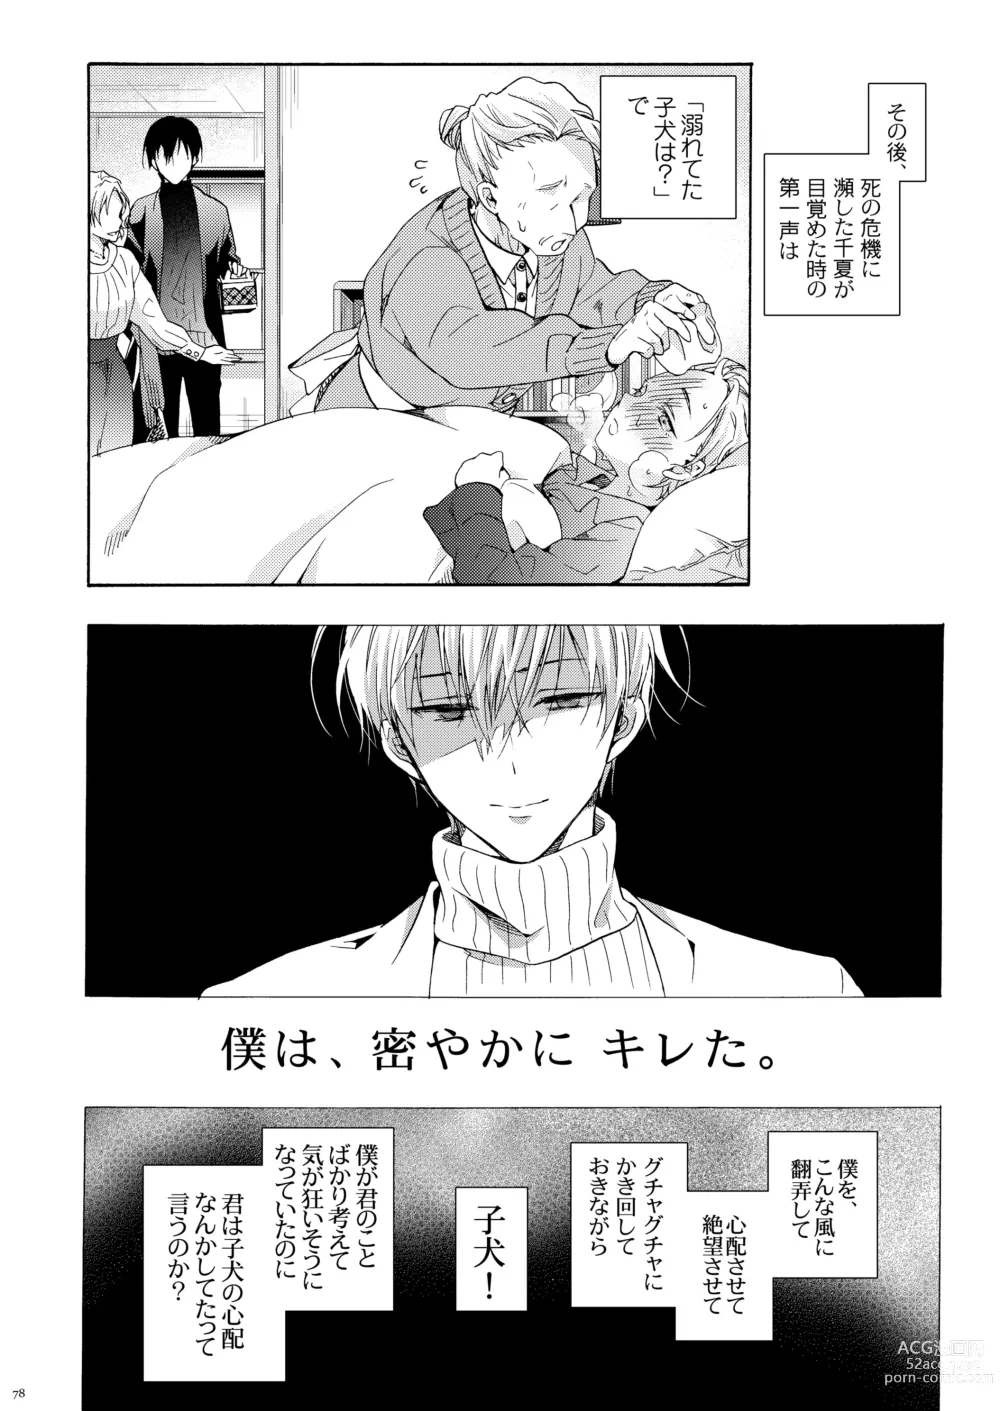 Page 77 of manga Boku no Tame no Omega